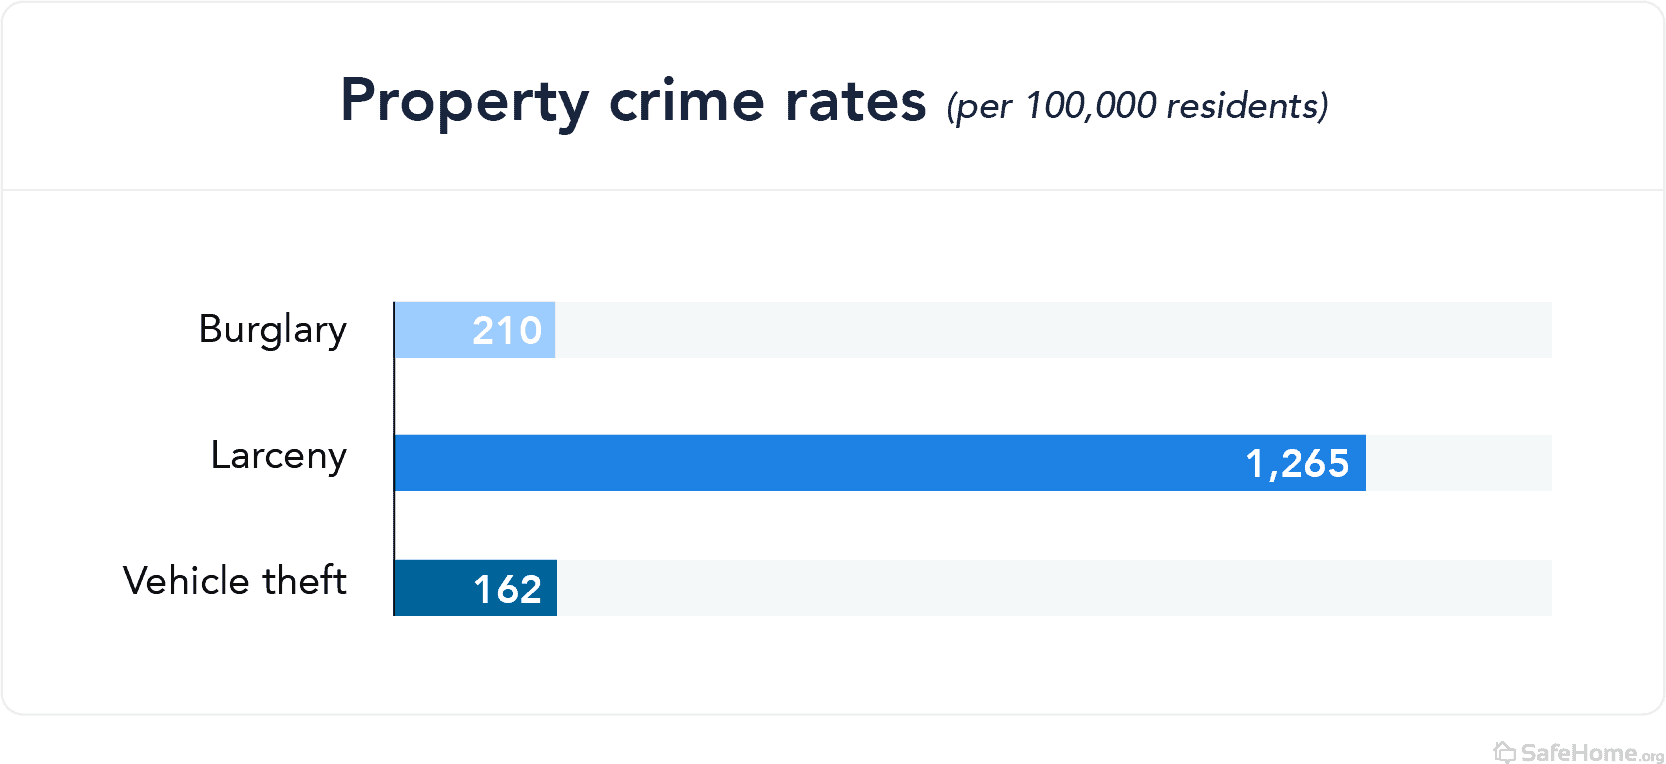 wyoming-property crime rates